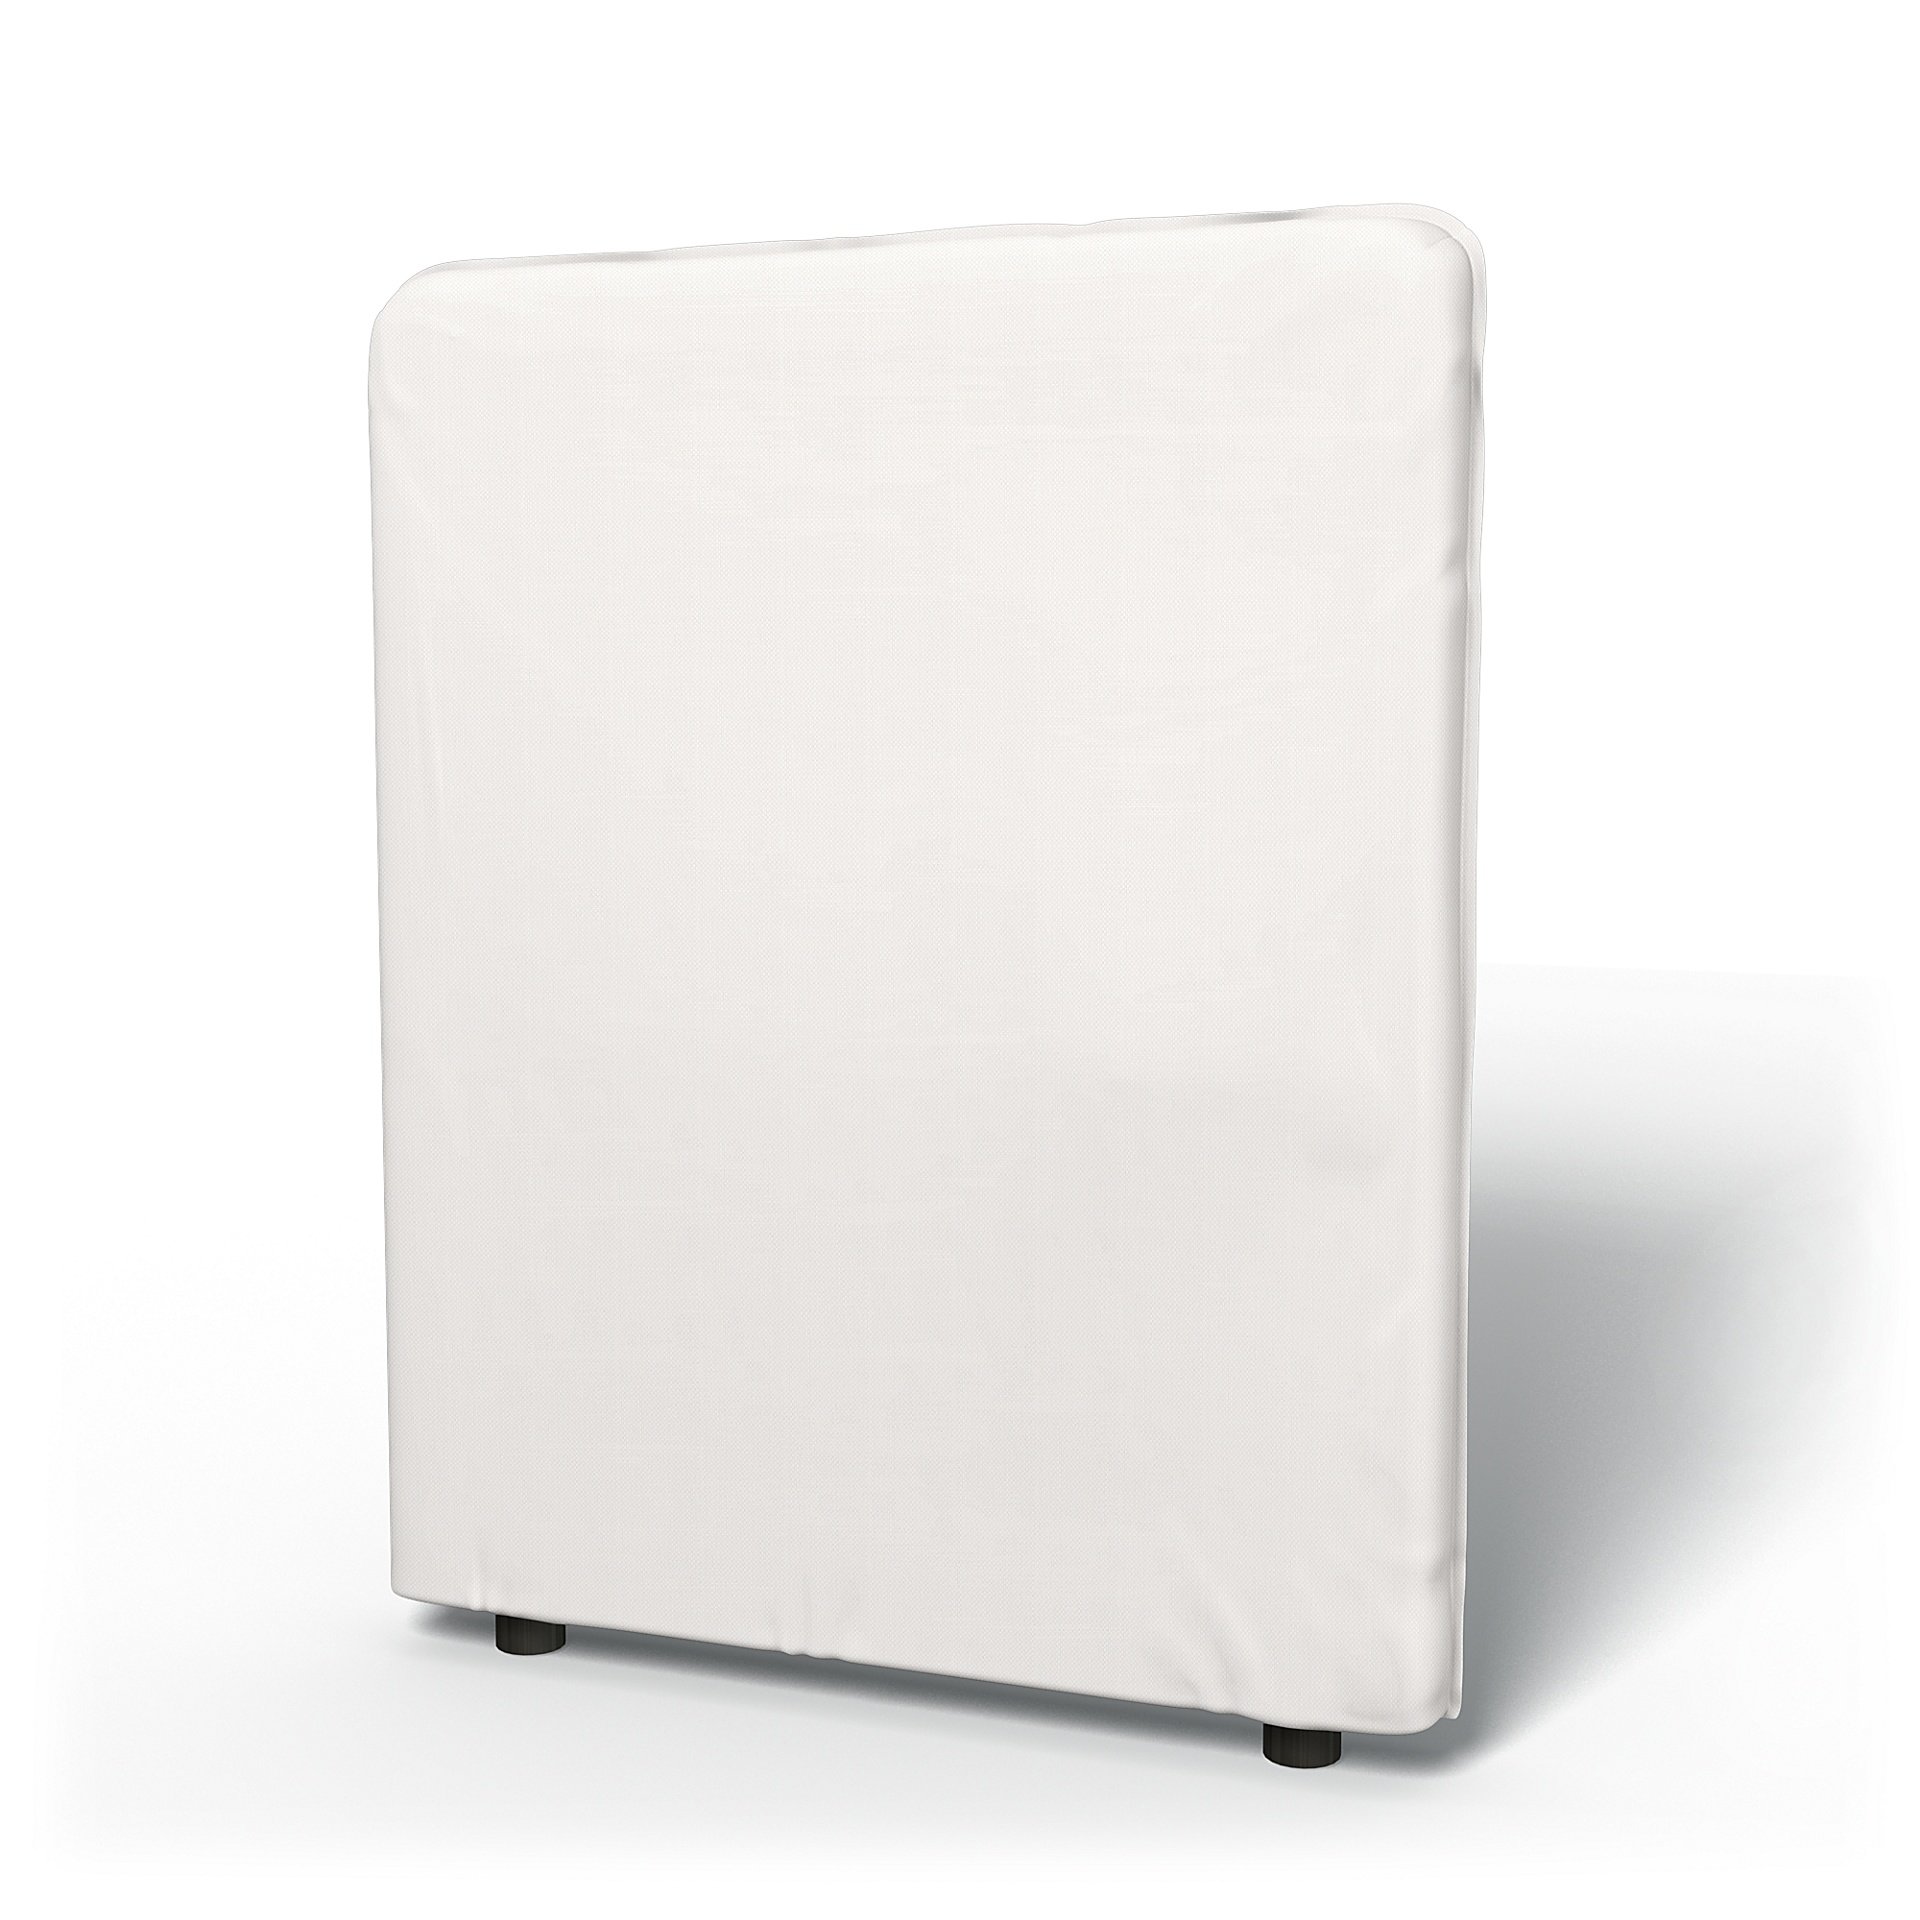 IKEA - Vallentuna High Backrest Cover 80x100cm 32x39in, Soft White, Linen - Bemz